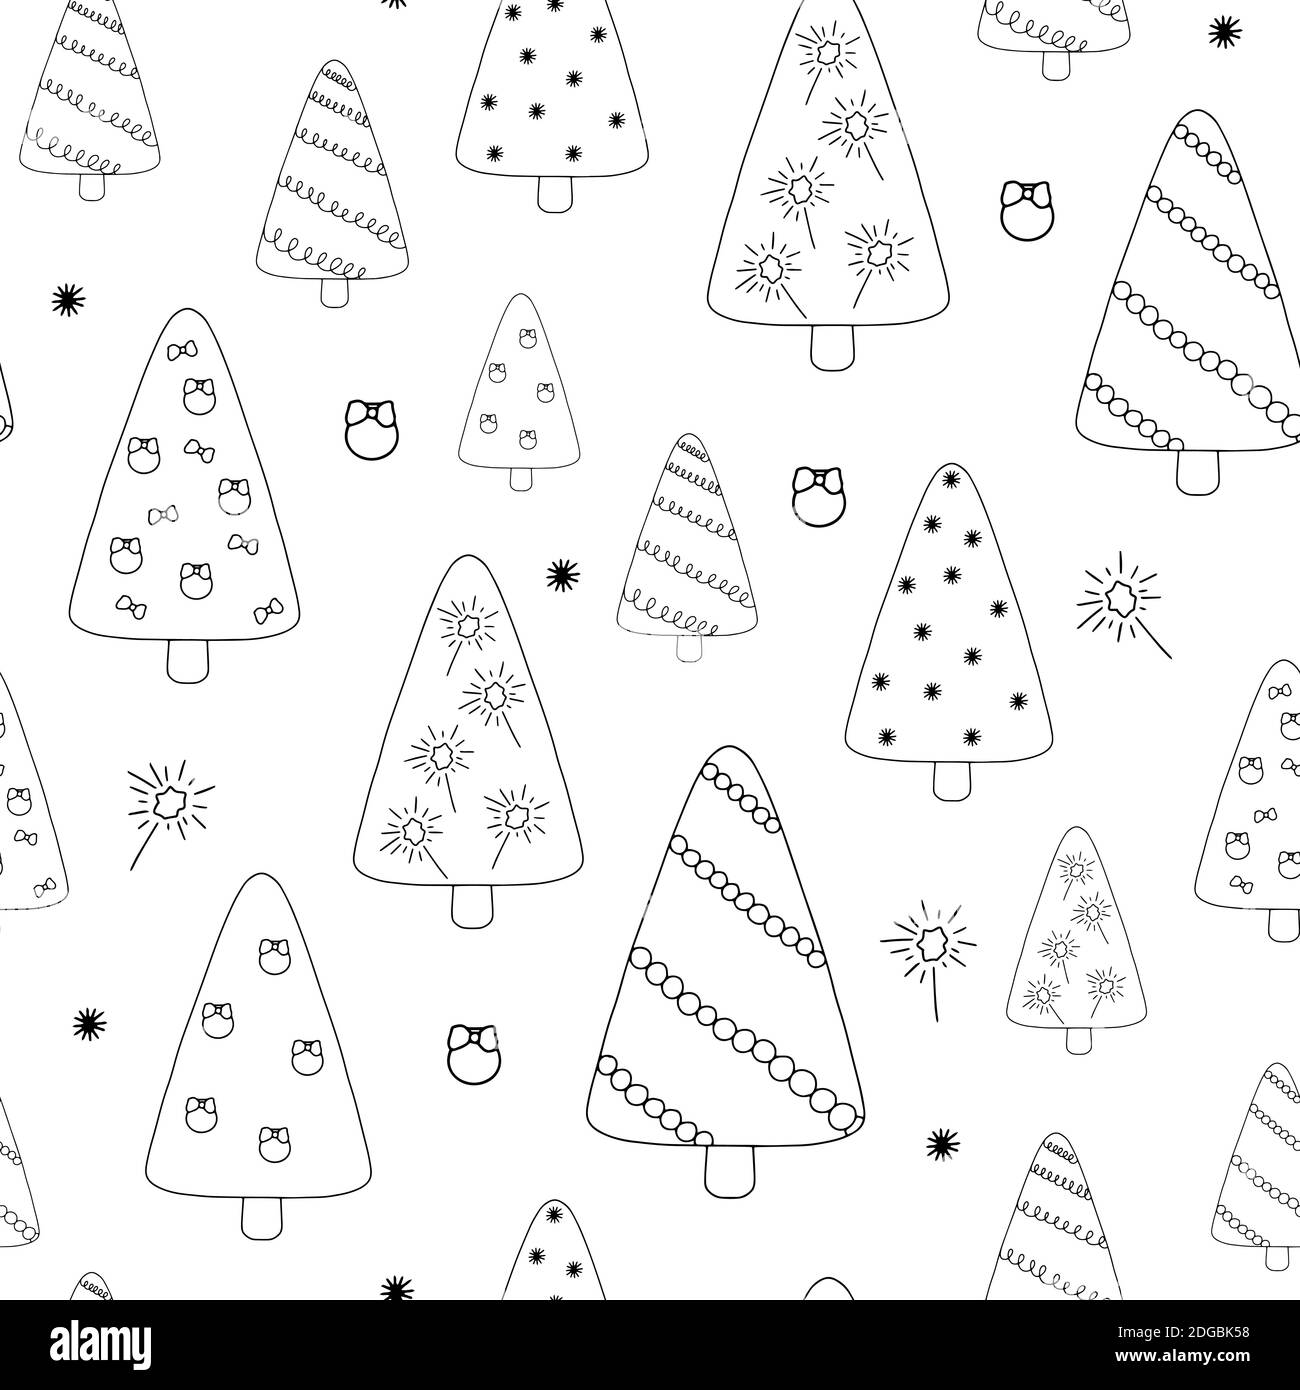 Christmas tree hand drawn doodle style seamless vector pattern, minimalist illustration, winter holiday decor, happy holidays celebration, family gath Stock Vector